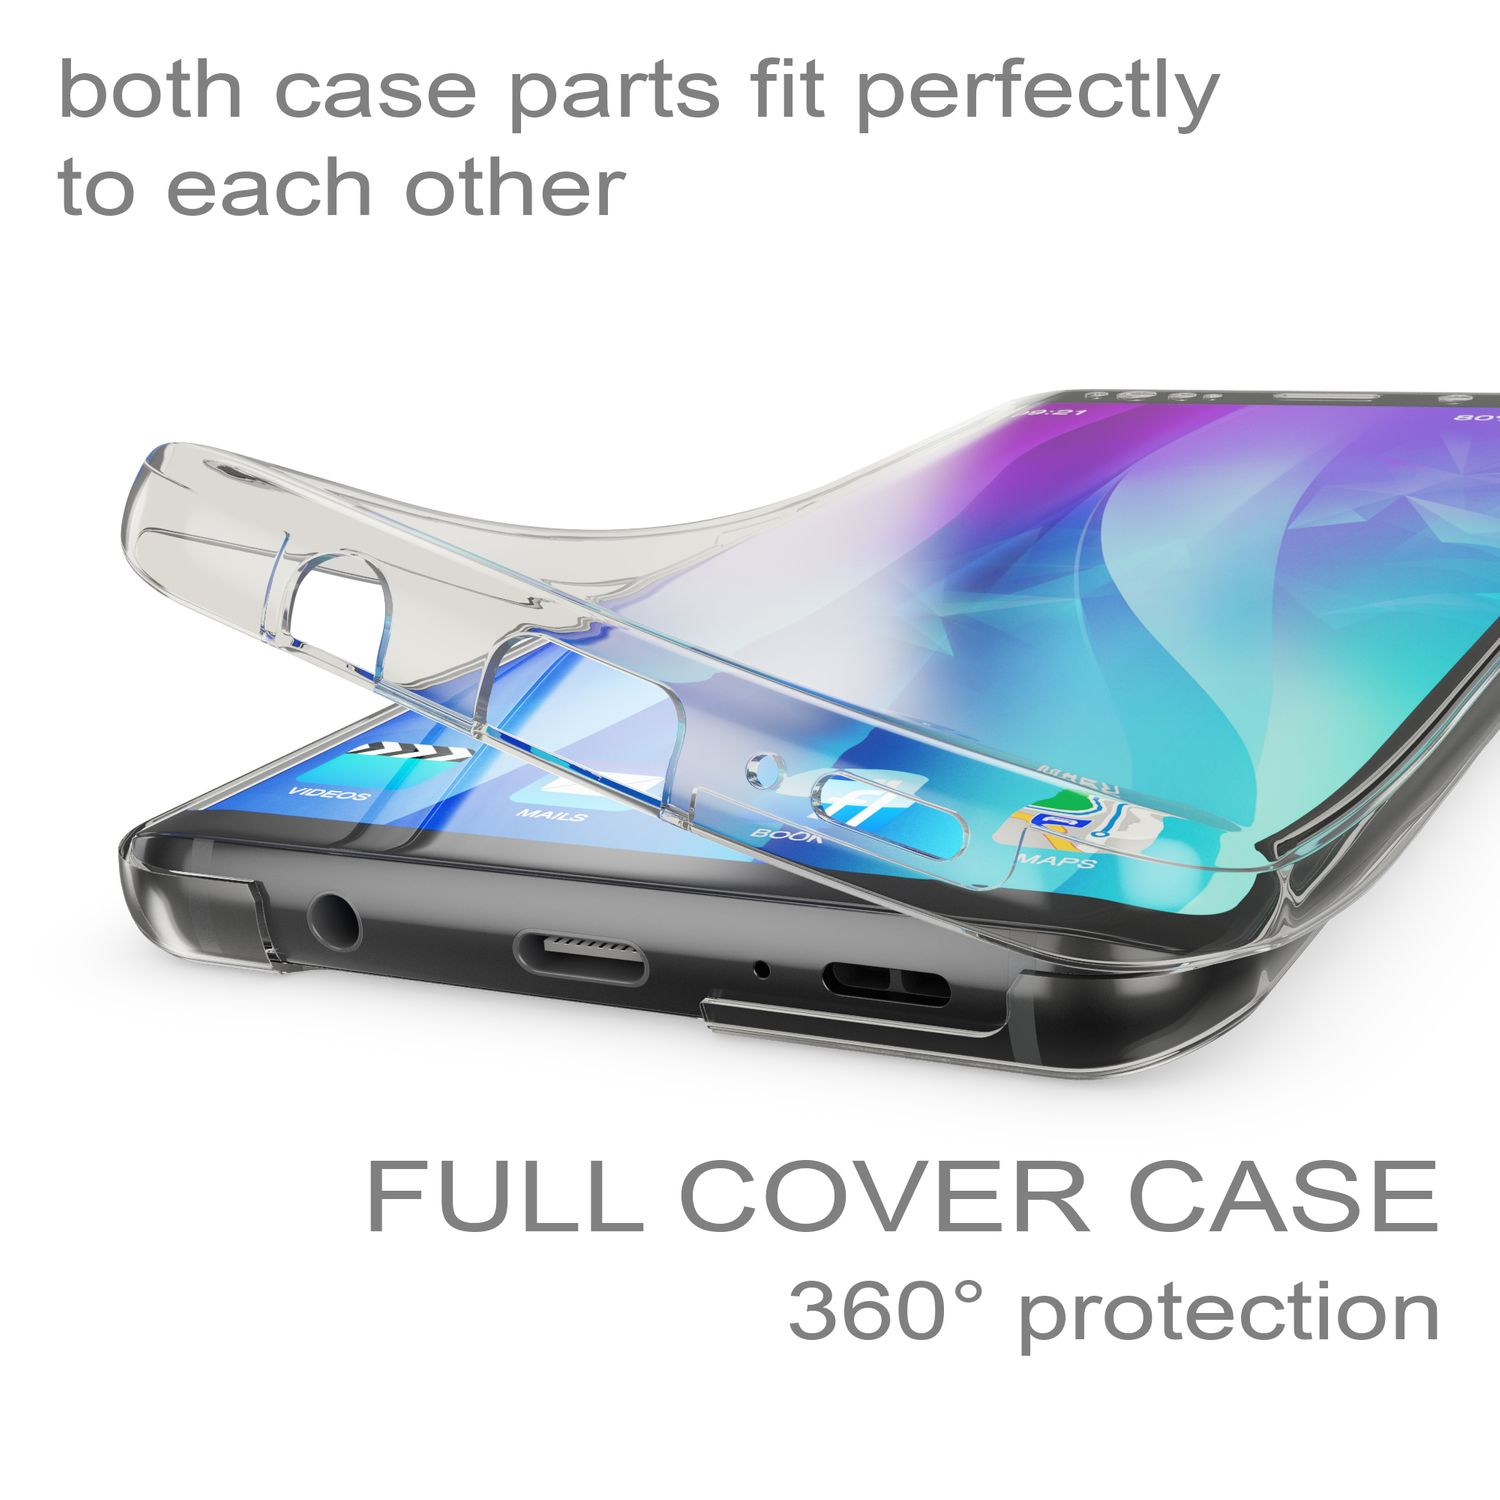 NALIA Klare 360 Grad Hülle, S9 Backcover, Galaxy Plus, Schwarz Silikon Samsung